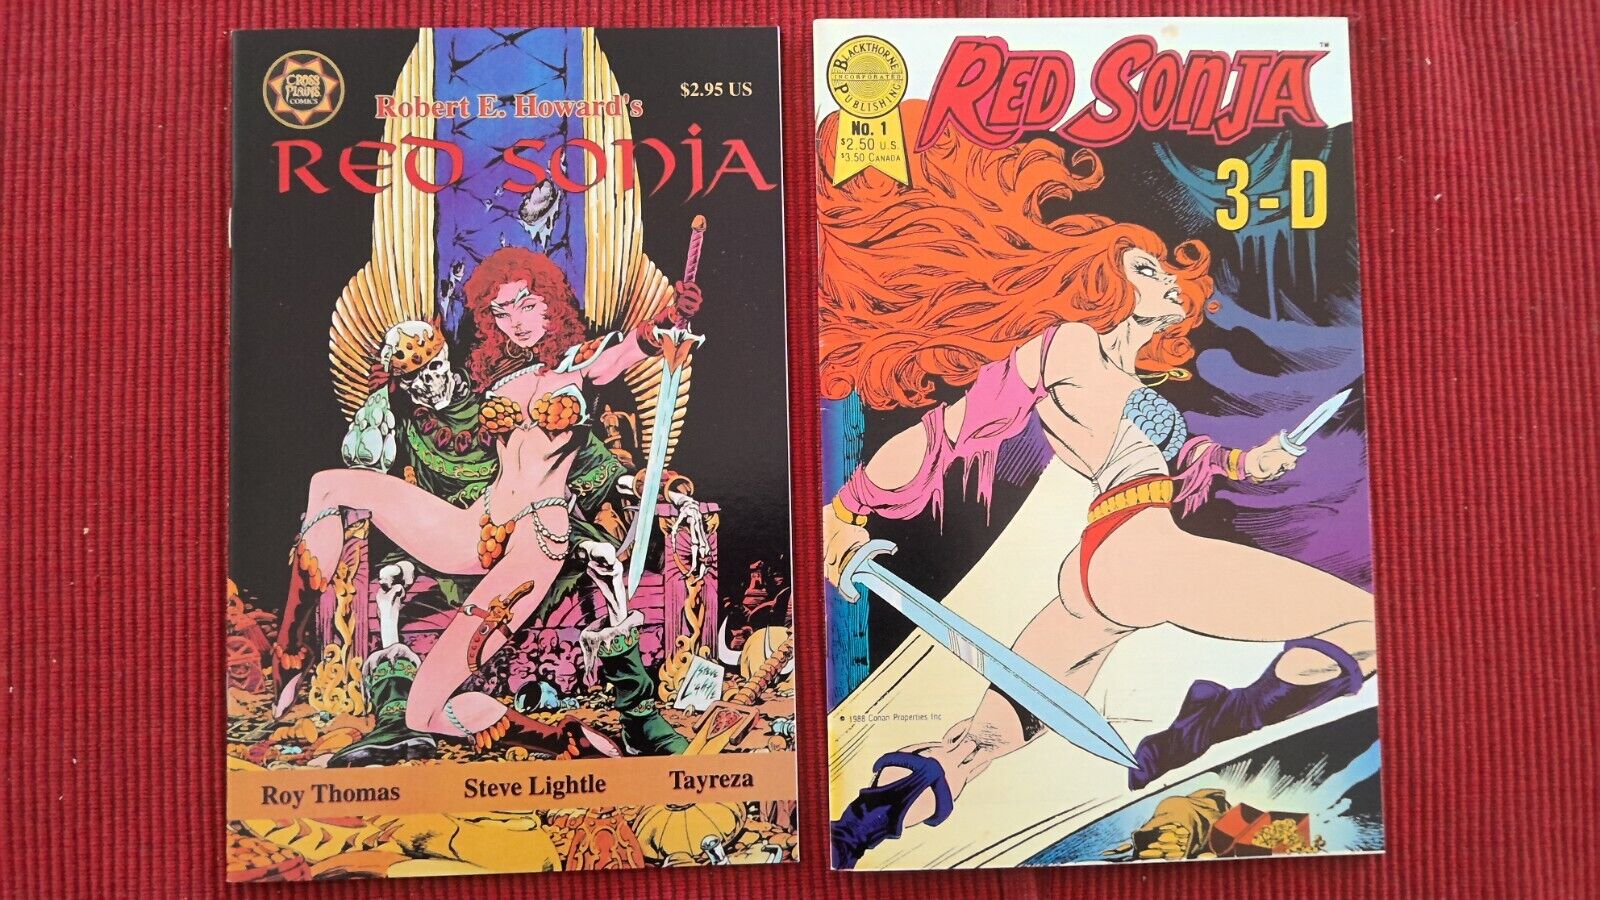 Red Sonja - Death in Scarlet (1999) Cross Plains + 3-D (1988) Blackthorne Comics